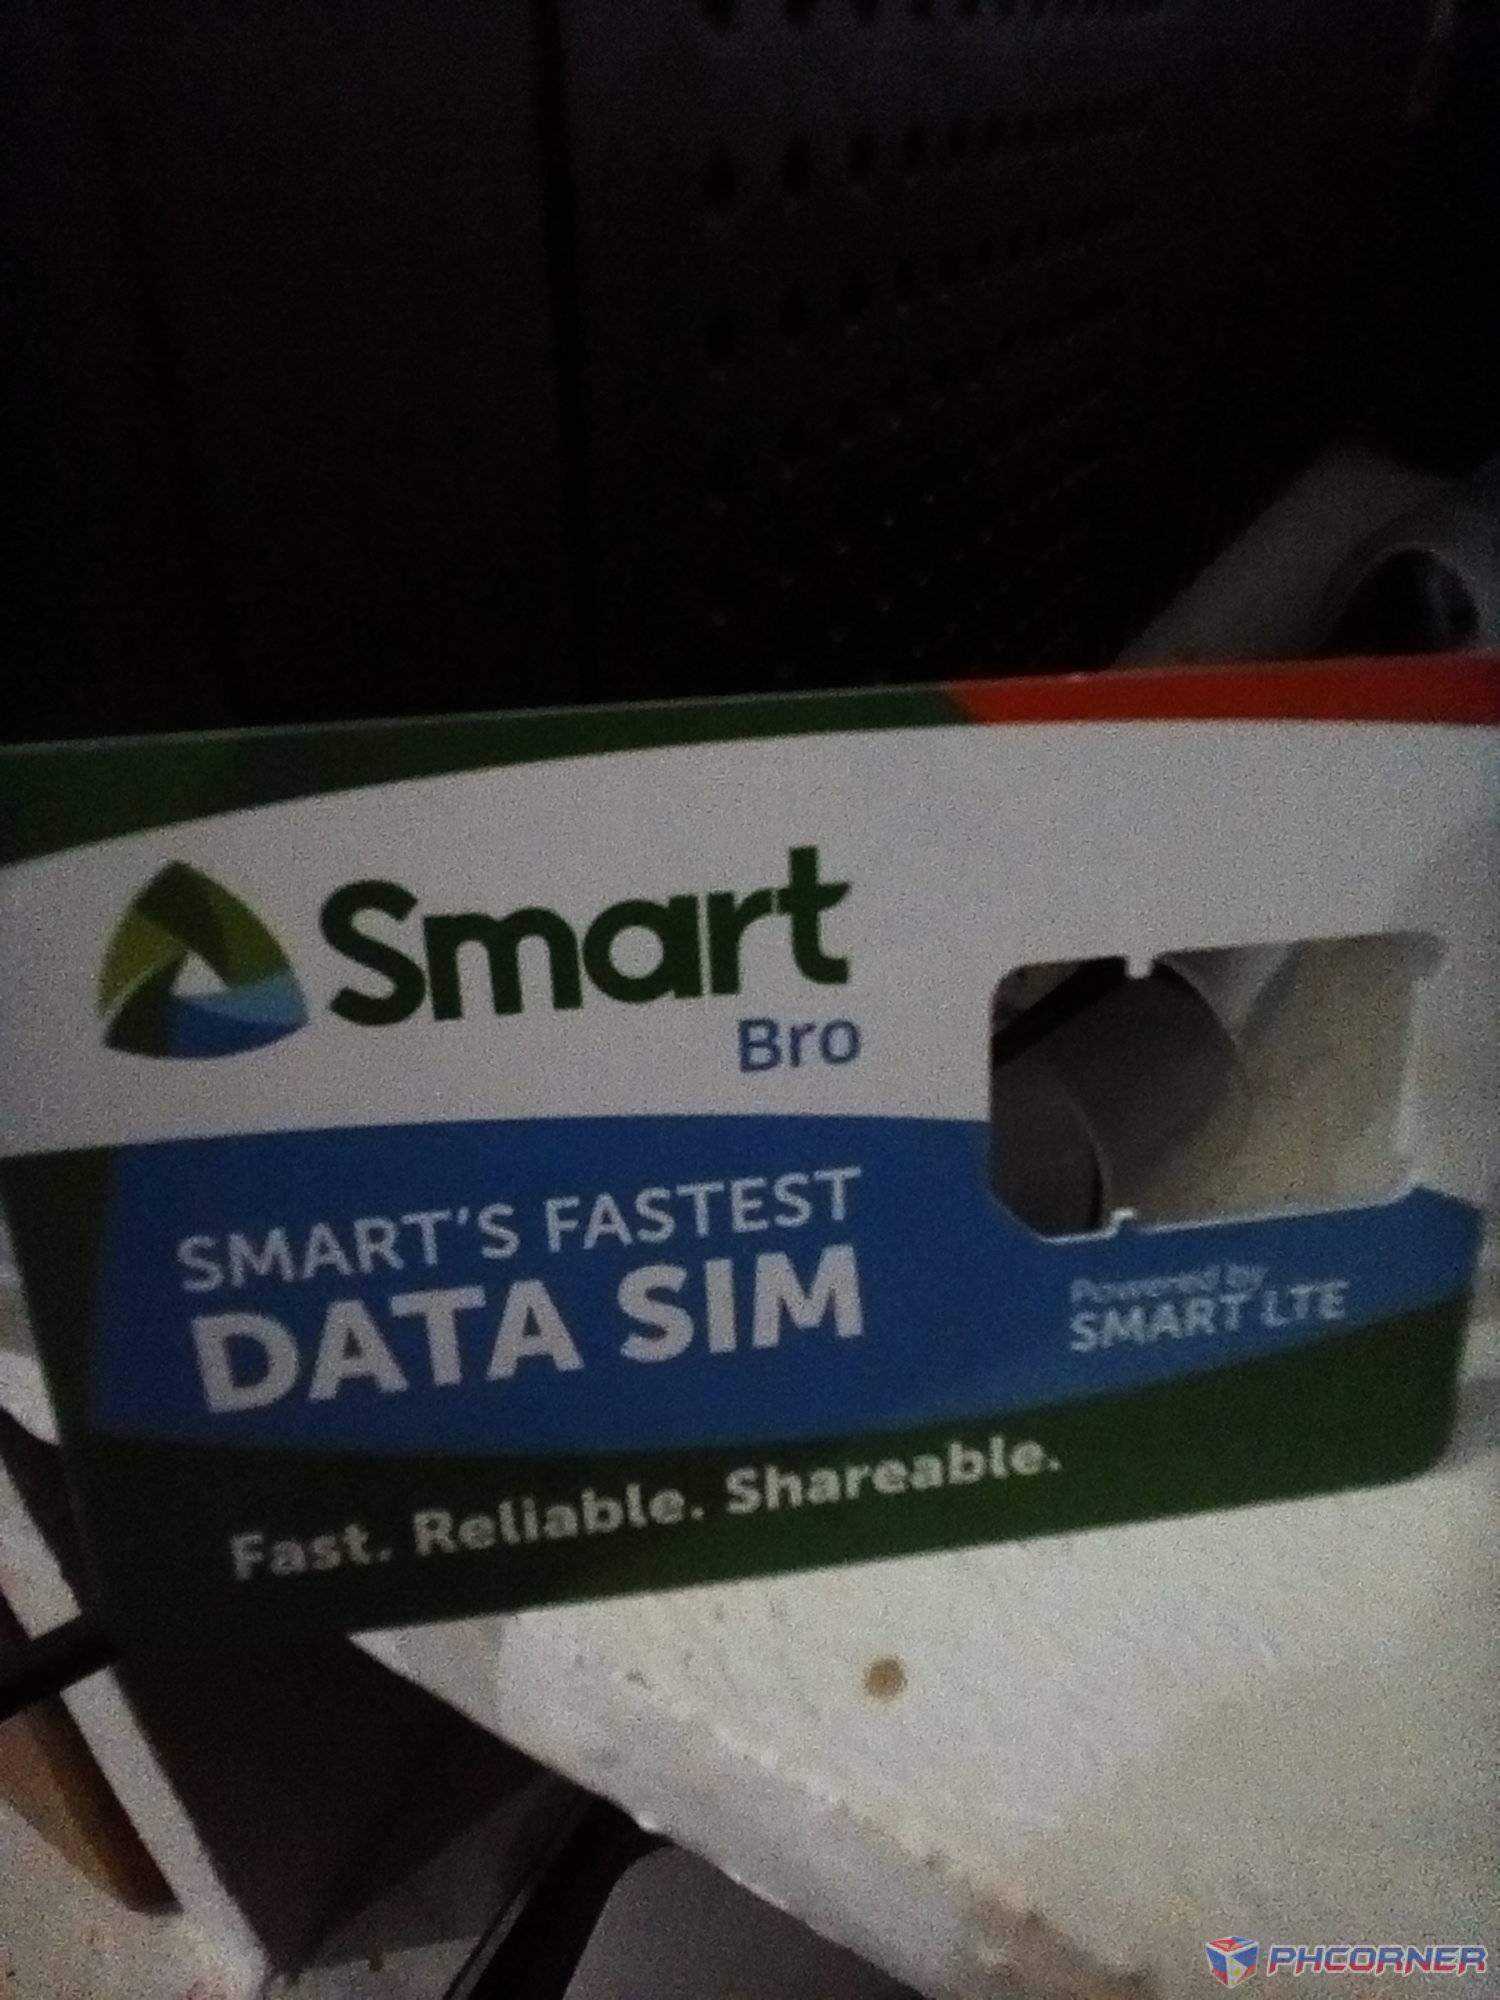 Smart Bro data sim